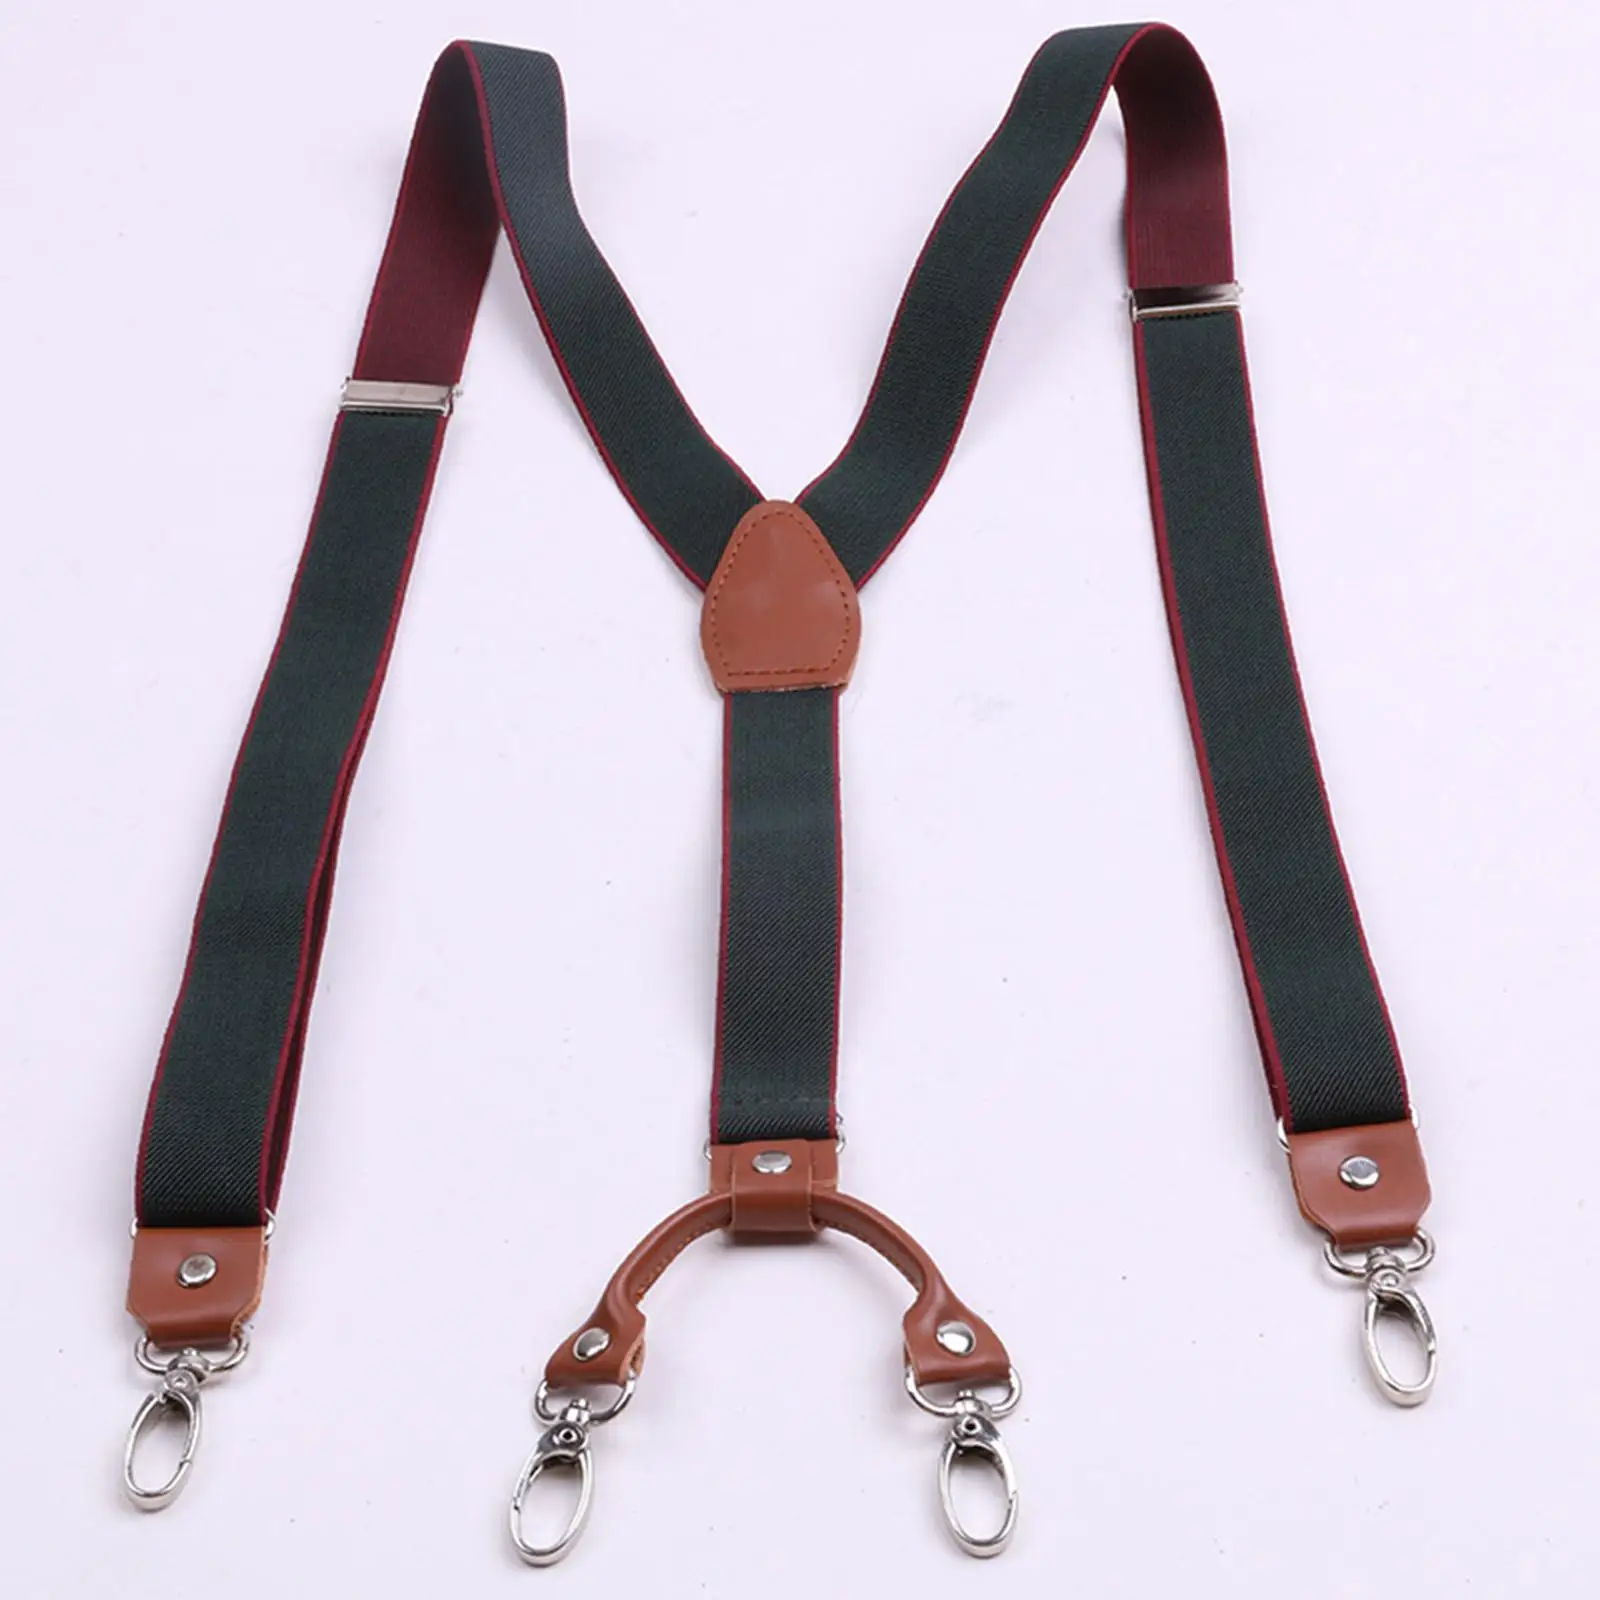 Suspenders for Men with 4 Swivel Hooks Elastic Y Back Adjustable Heavy Duty 1 inch Wide Belt Loops  Unisex for Work Casual